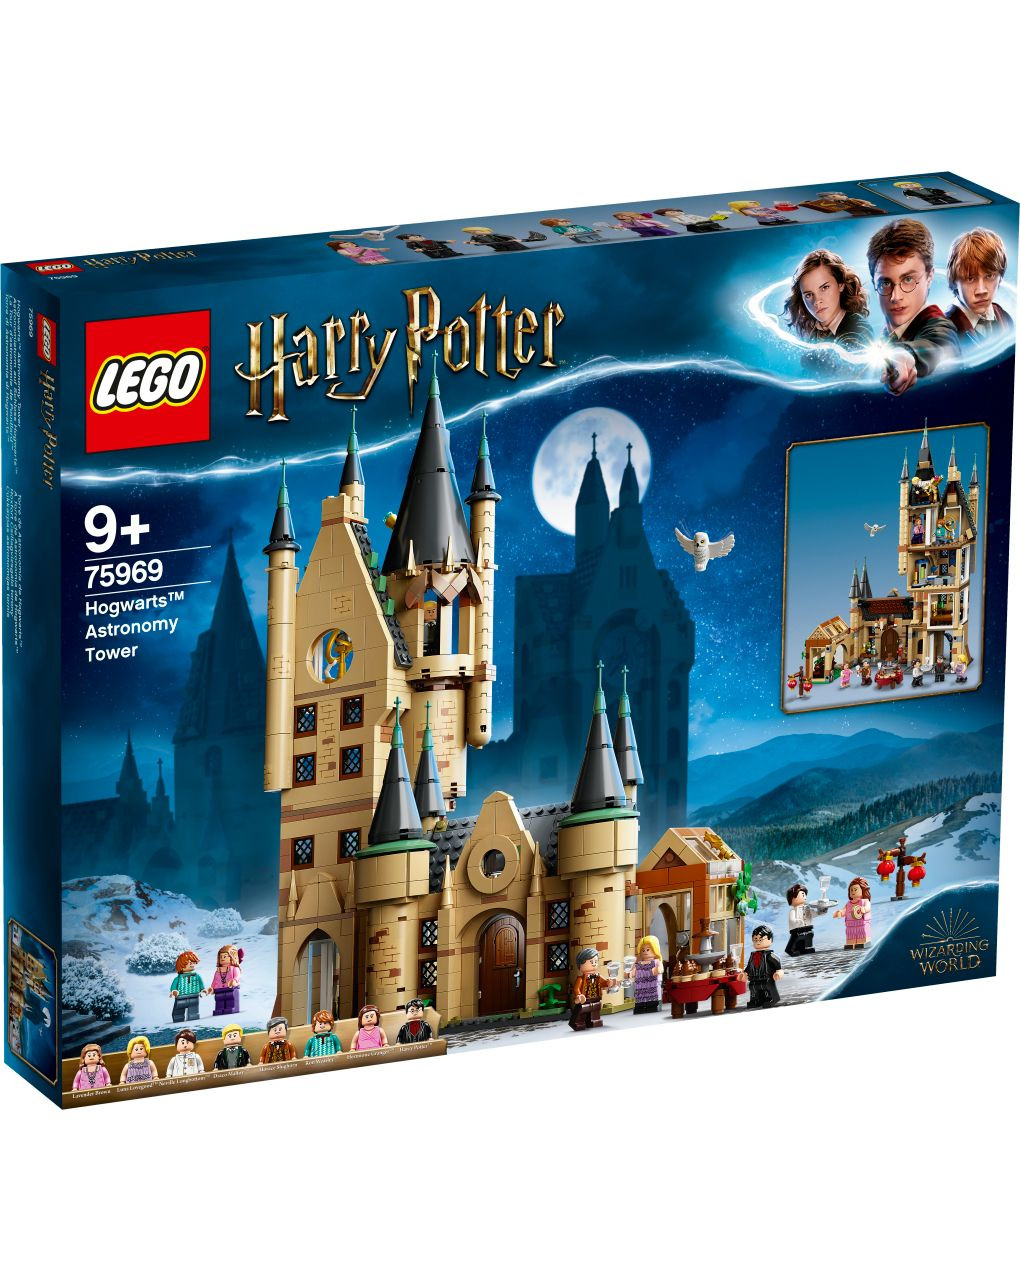 Lego harry potter hogwarts astronomy tower 75969